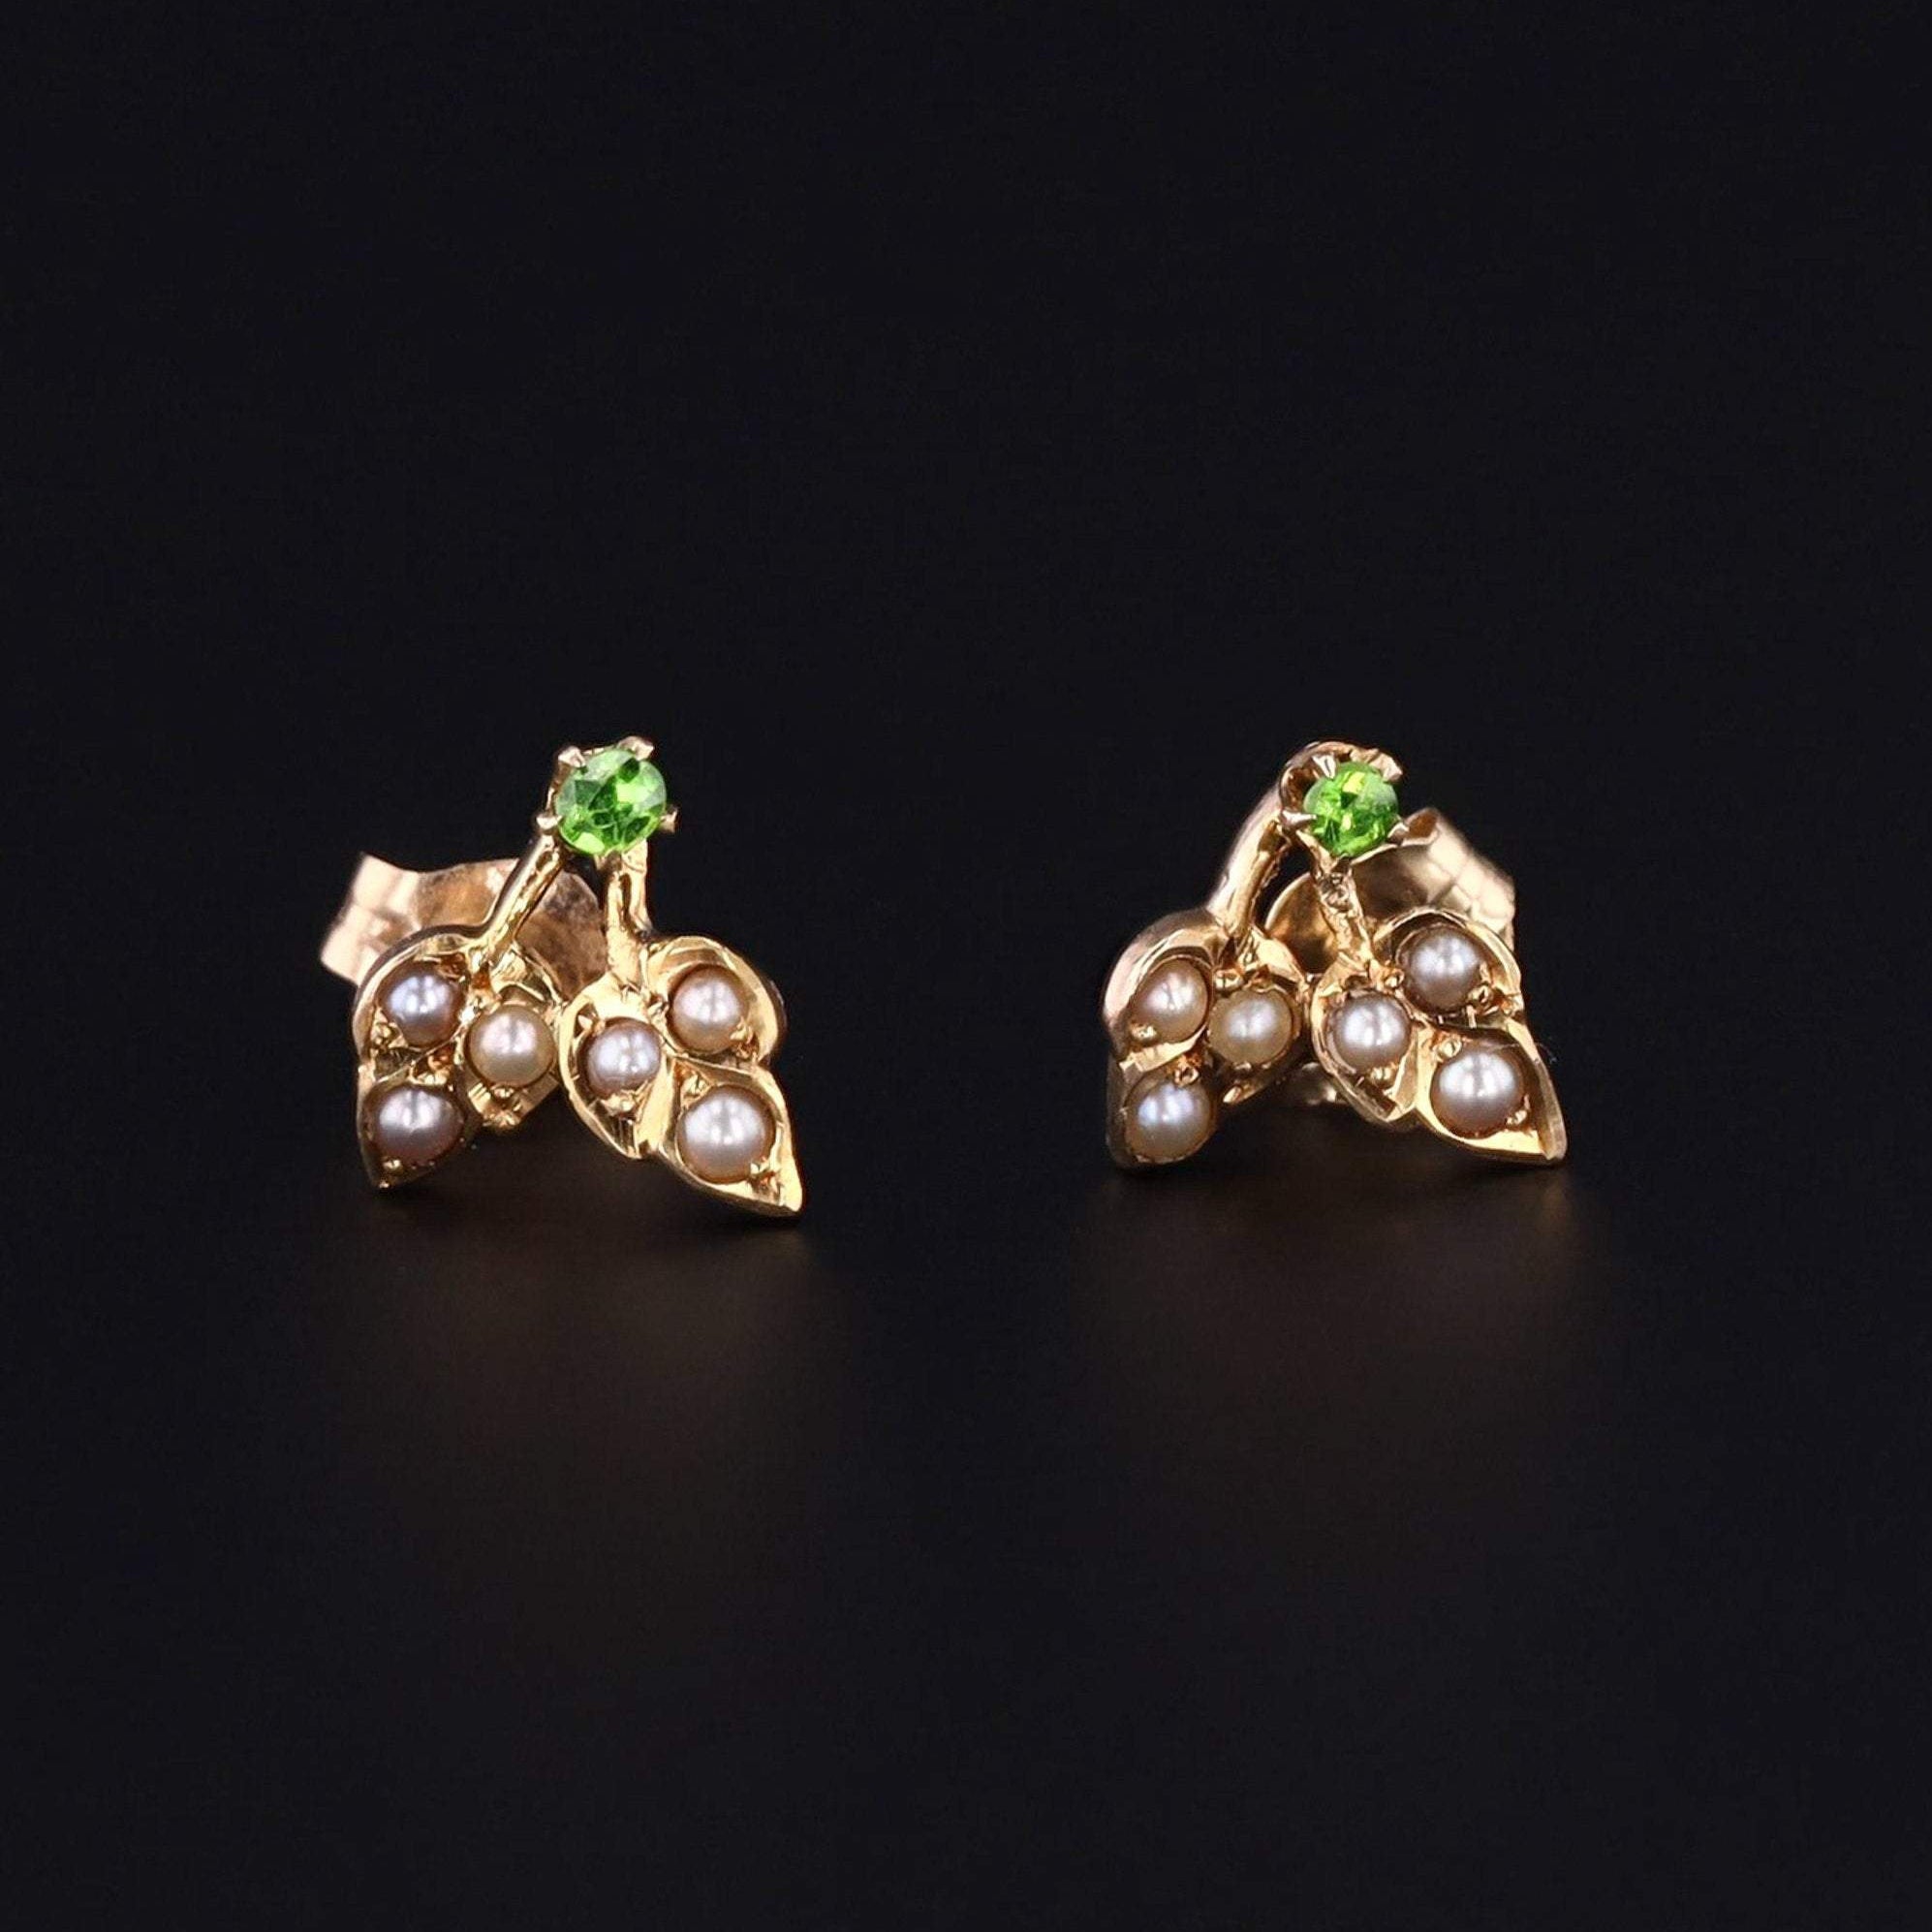 Pearl & Demantoid Garnet Flower Earrings | Antique Pin Conversion Earrings | Pearl Earrings | Bridal Earrings